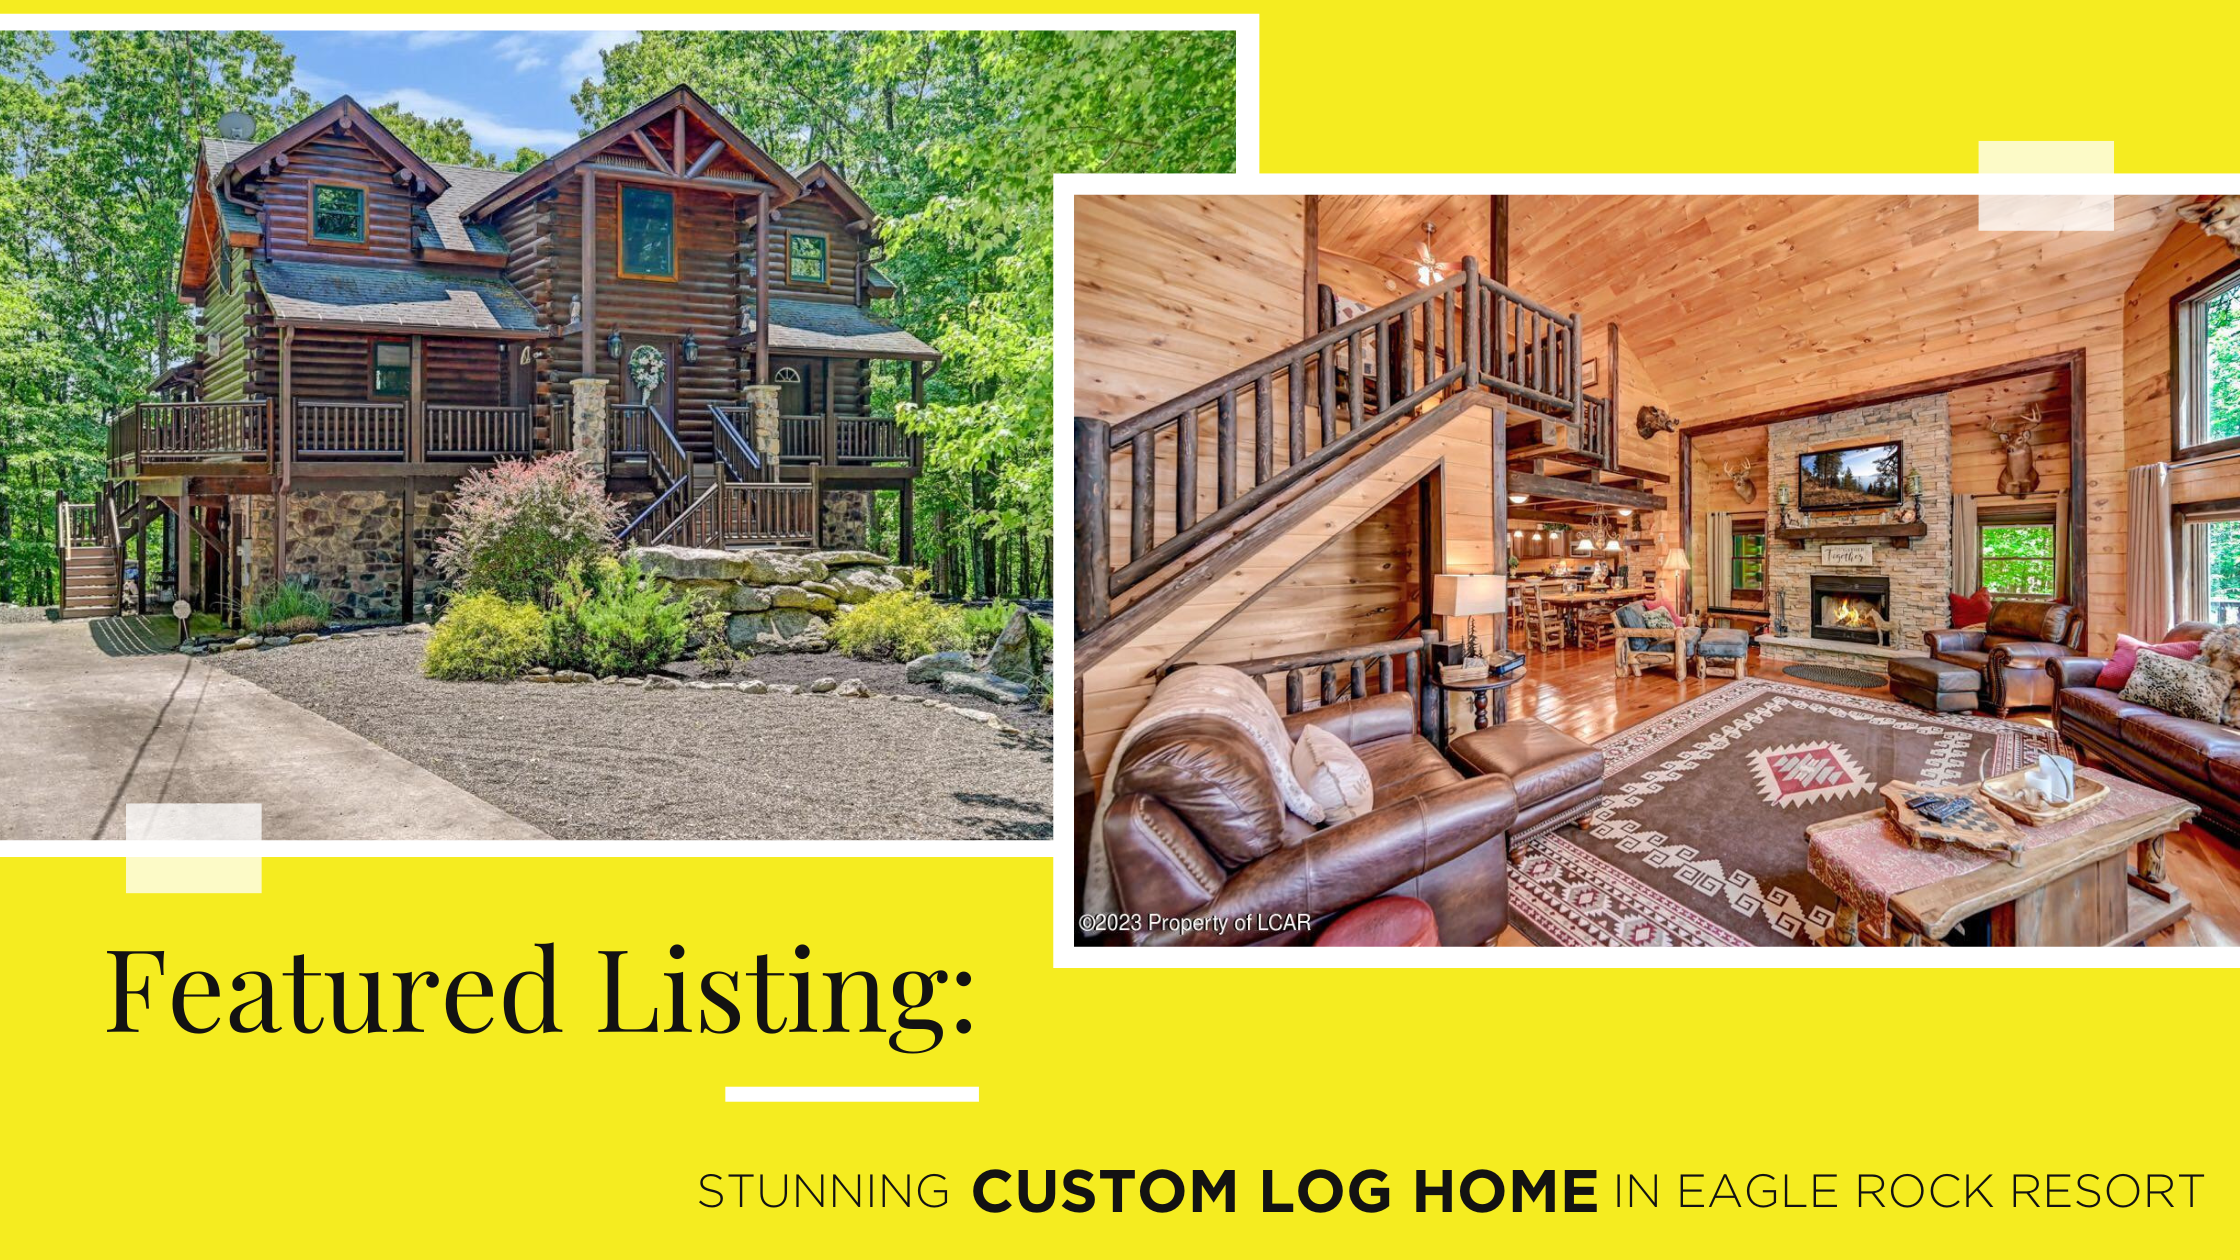 Lewith & Freeman Featured Listing: Stunning Custom Log Home in Eagle Rock Resort